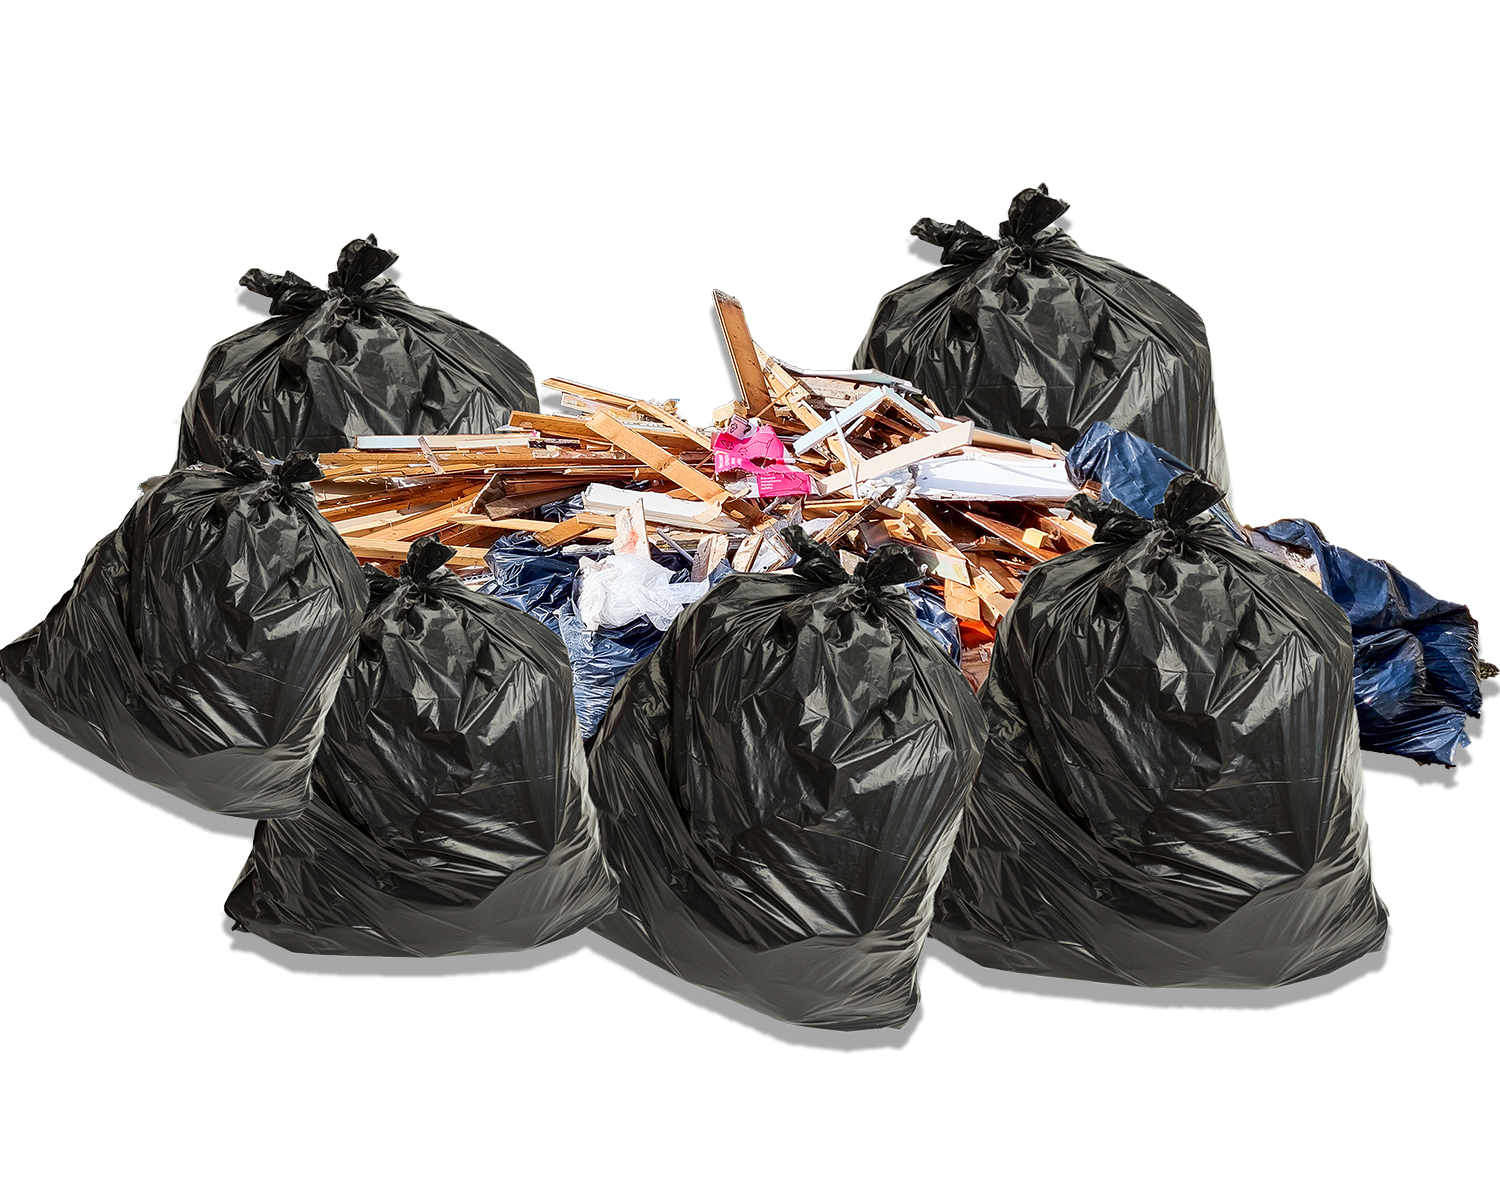 Pile of trash and trashbags